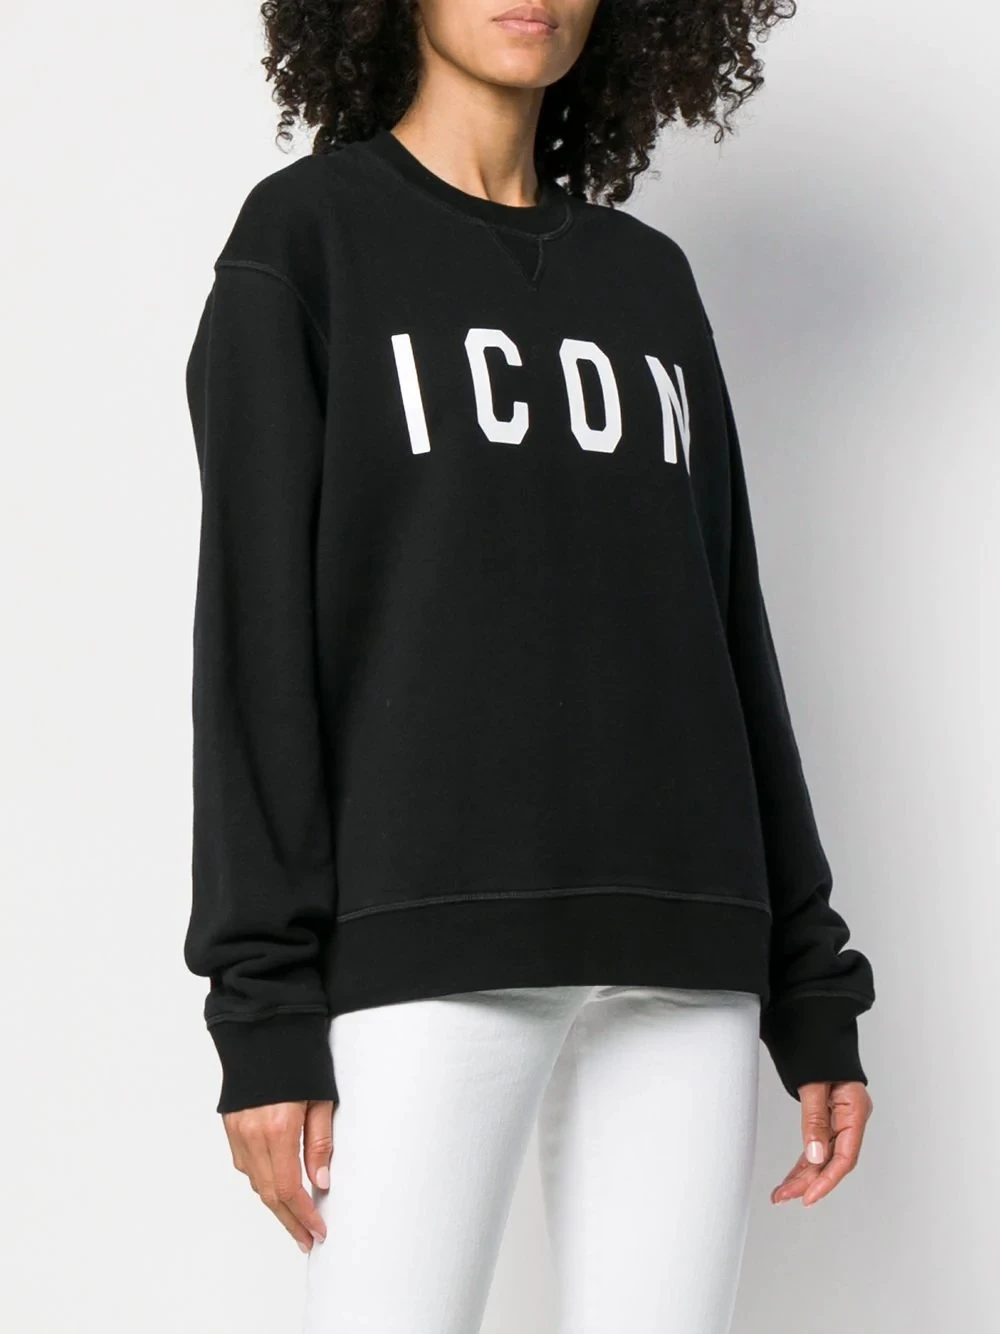 

DSQ Brand Sweater Mens Designer Hoodies Italy Fashion Sweatshirts Autumn Winter Print Man Hoody Male 100% Cotton Tops 84162